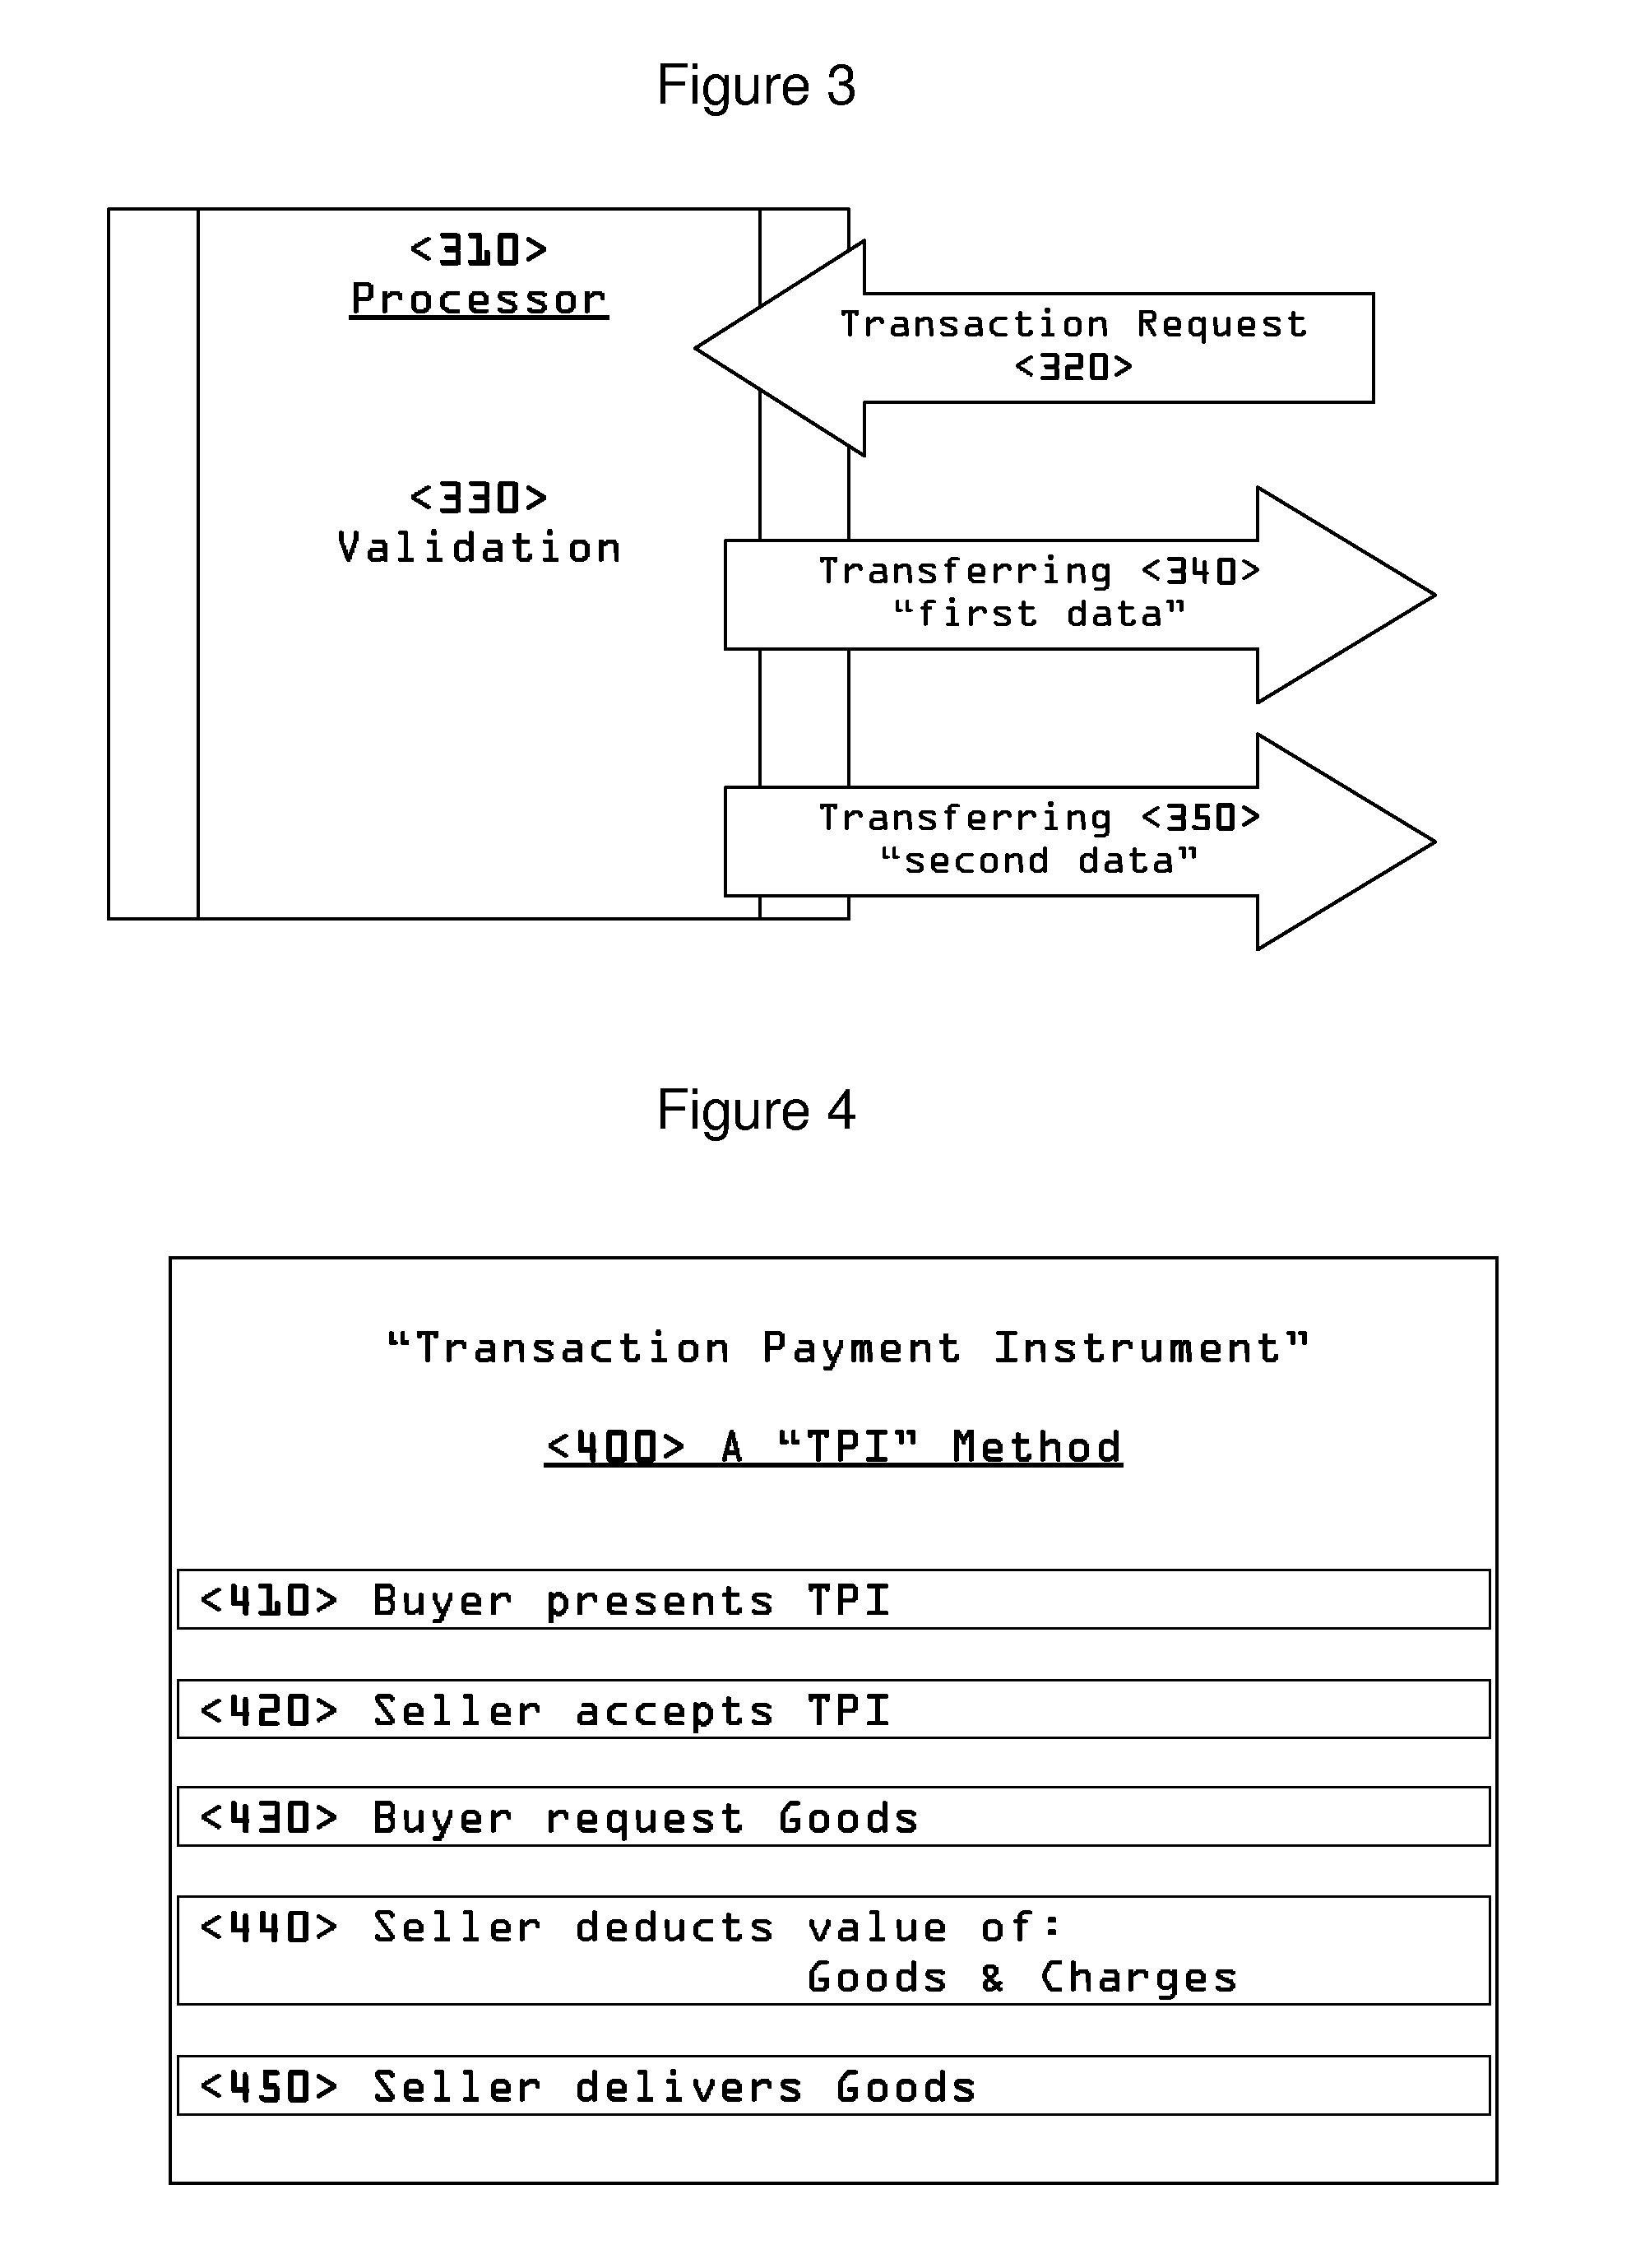 Transaction Payment Instrument